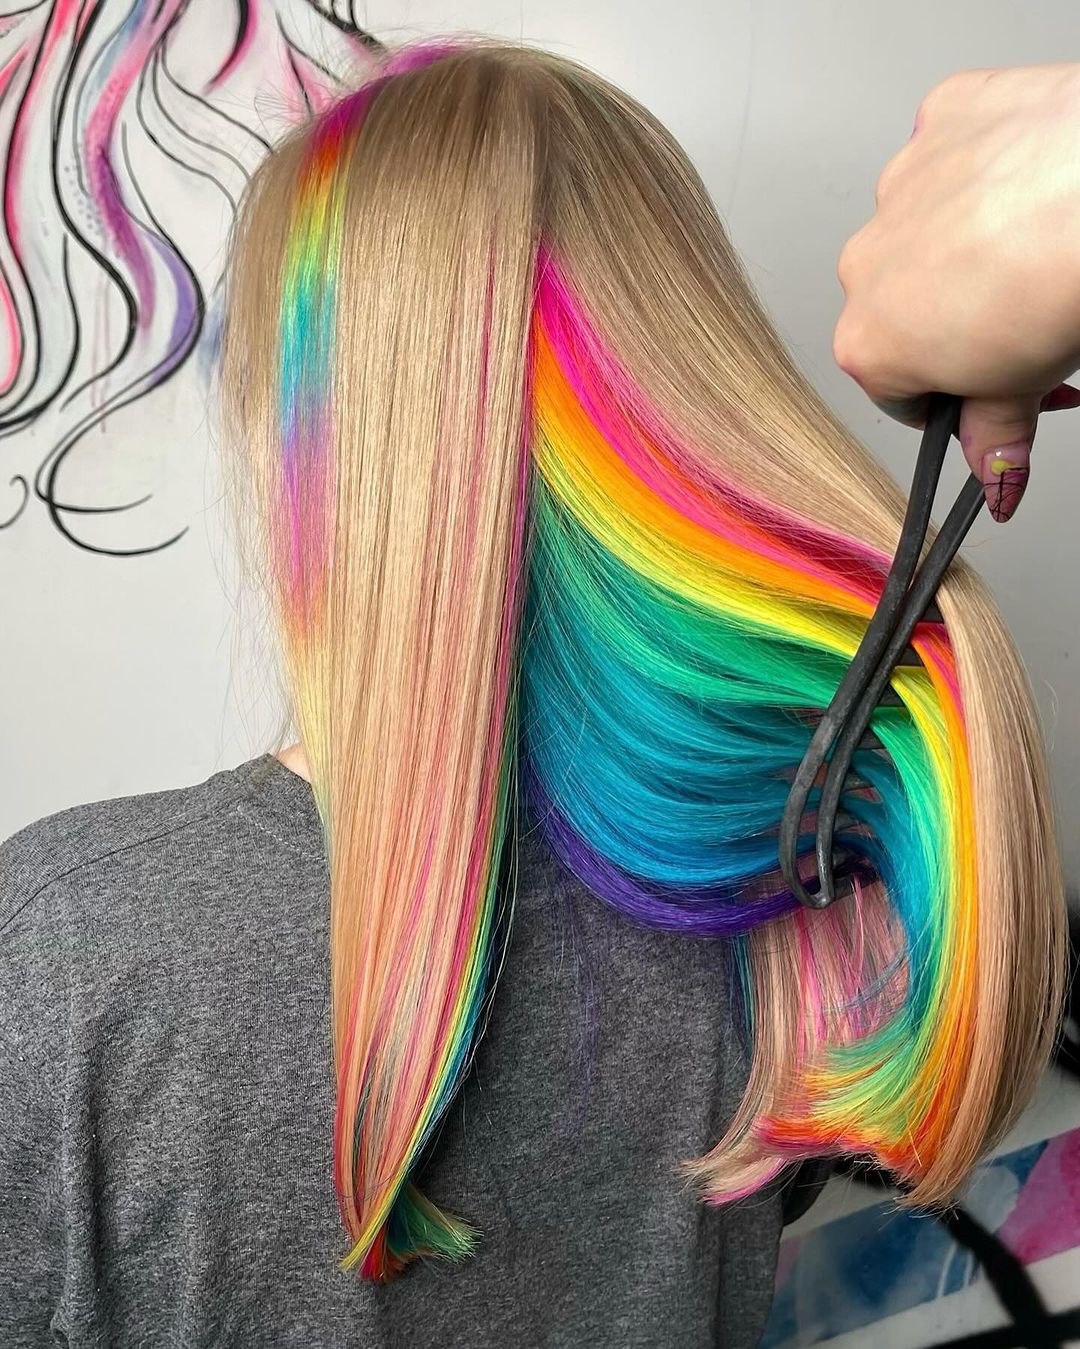 arco iris oculto en el pelo rubio